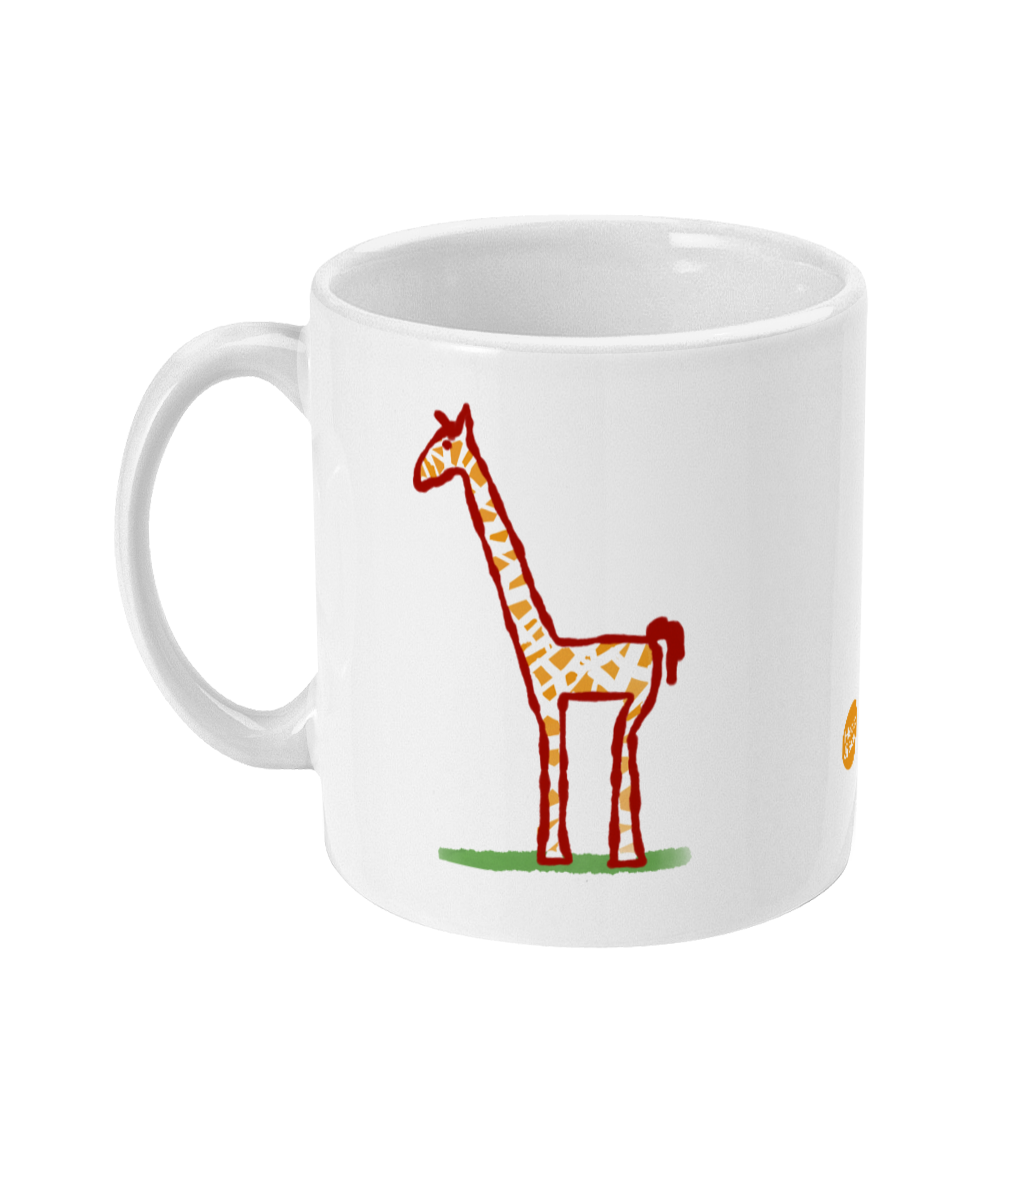 Cute Giraffe mug - Illustrated Jeffrey Giraffe coffee mugs by Hector and bone  - Left view 